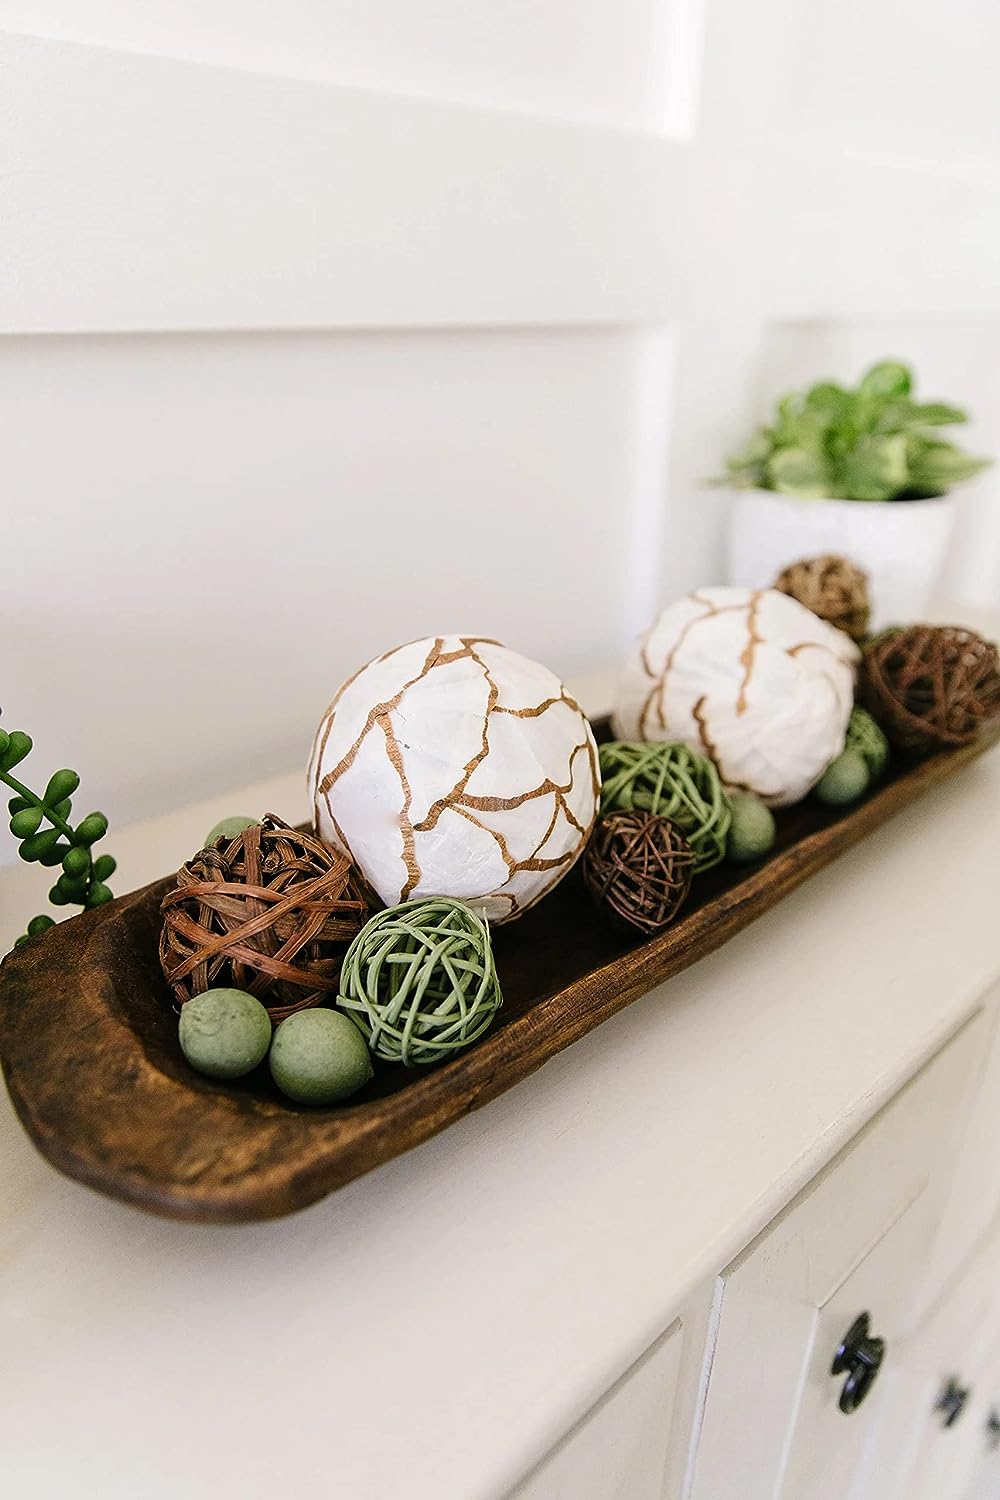 LUXHOUSE 20x6 Handmade Decorative Dough Bowl In A Gift Box - $15